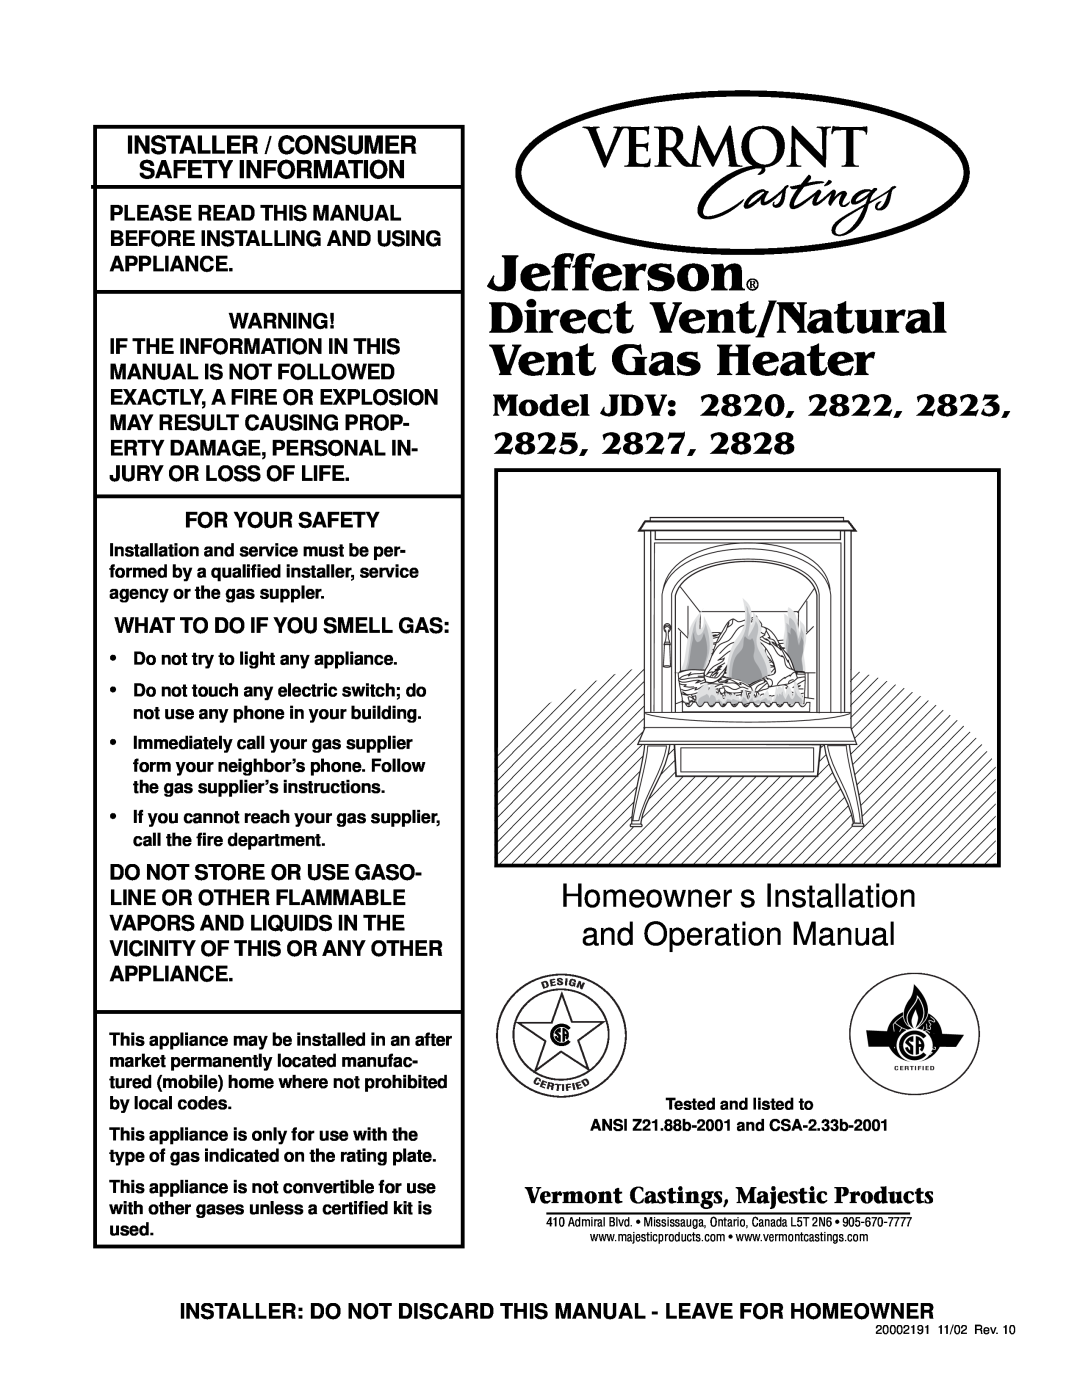 Vermont Casting 2828, 820, 2823, 2827, 2822 operation manual Jefferson, Direct Vent/Natural Vent Gas Heater, Model JDV, 2825 